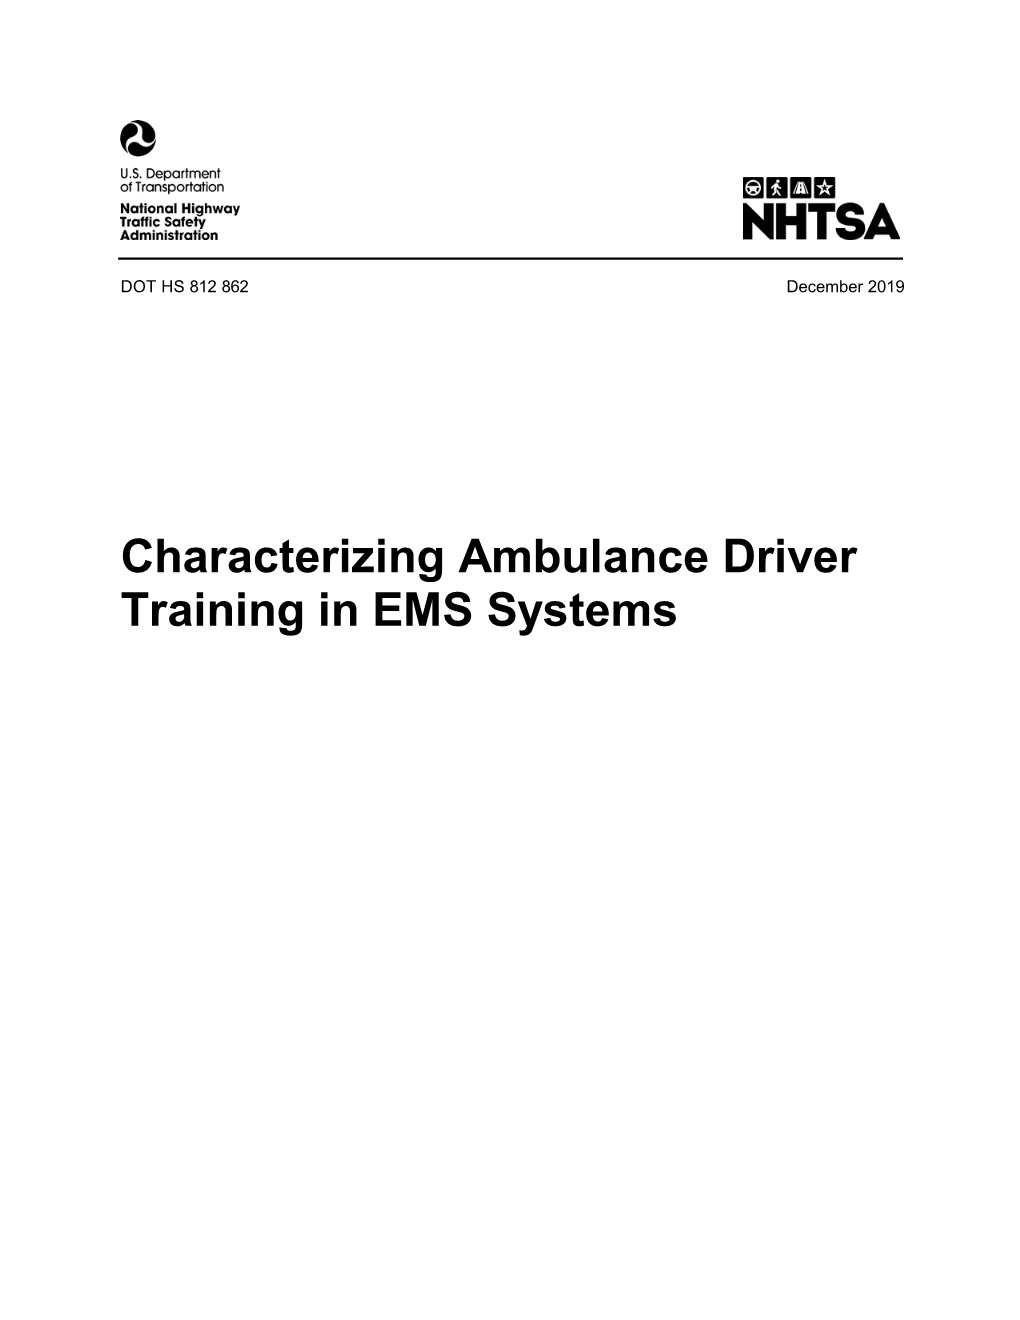 NHTSA Characterizing Ambulance Driver Training in EMS Systems